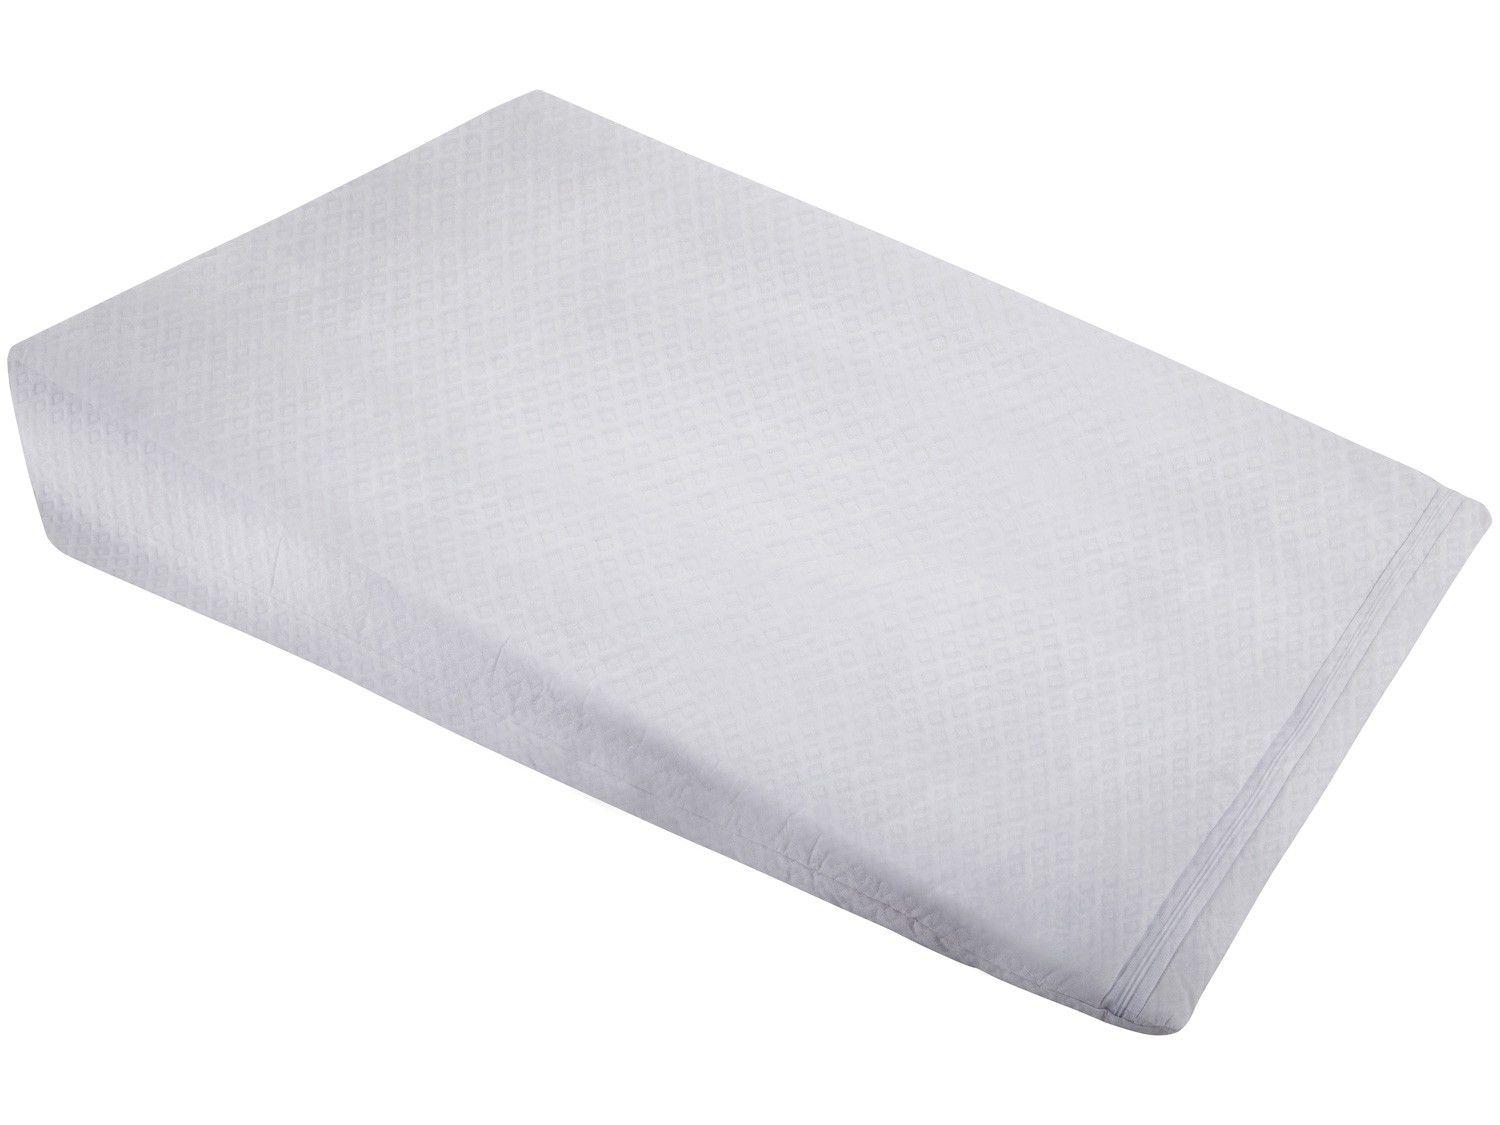 Capa para Travesseiro Anti-Refluxo Impermeável - Fibrasca Branco 60x83cm